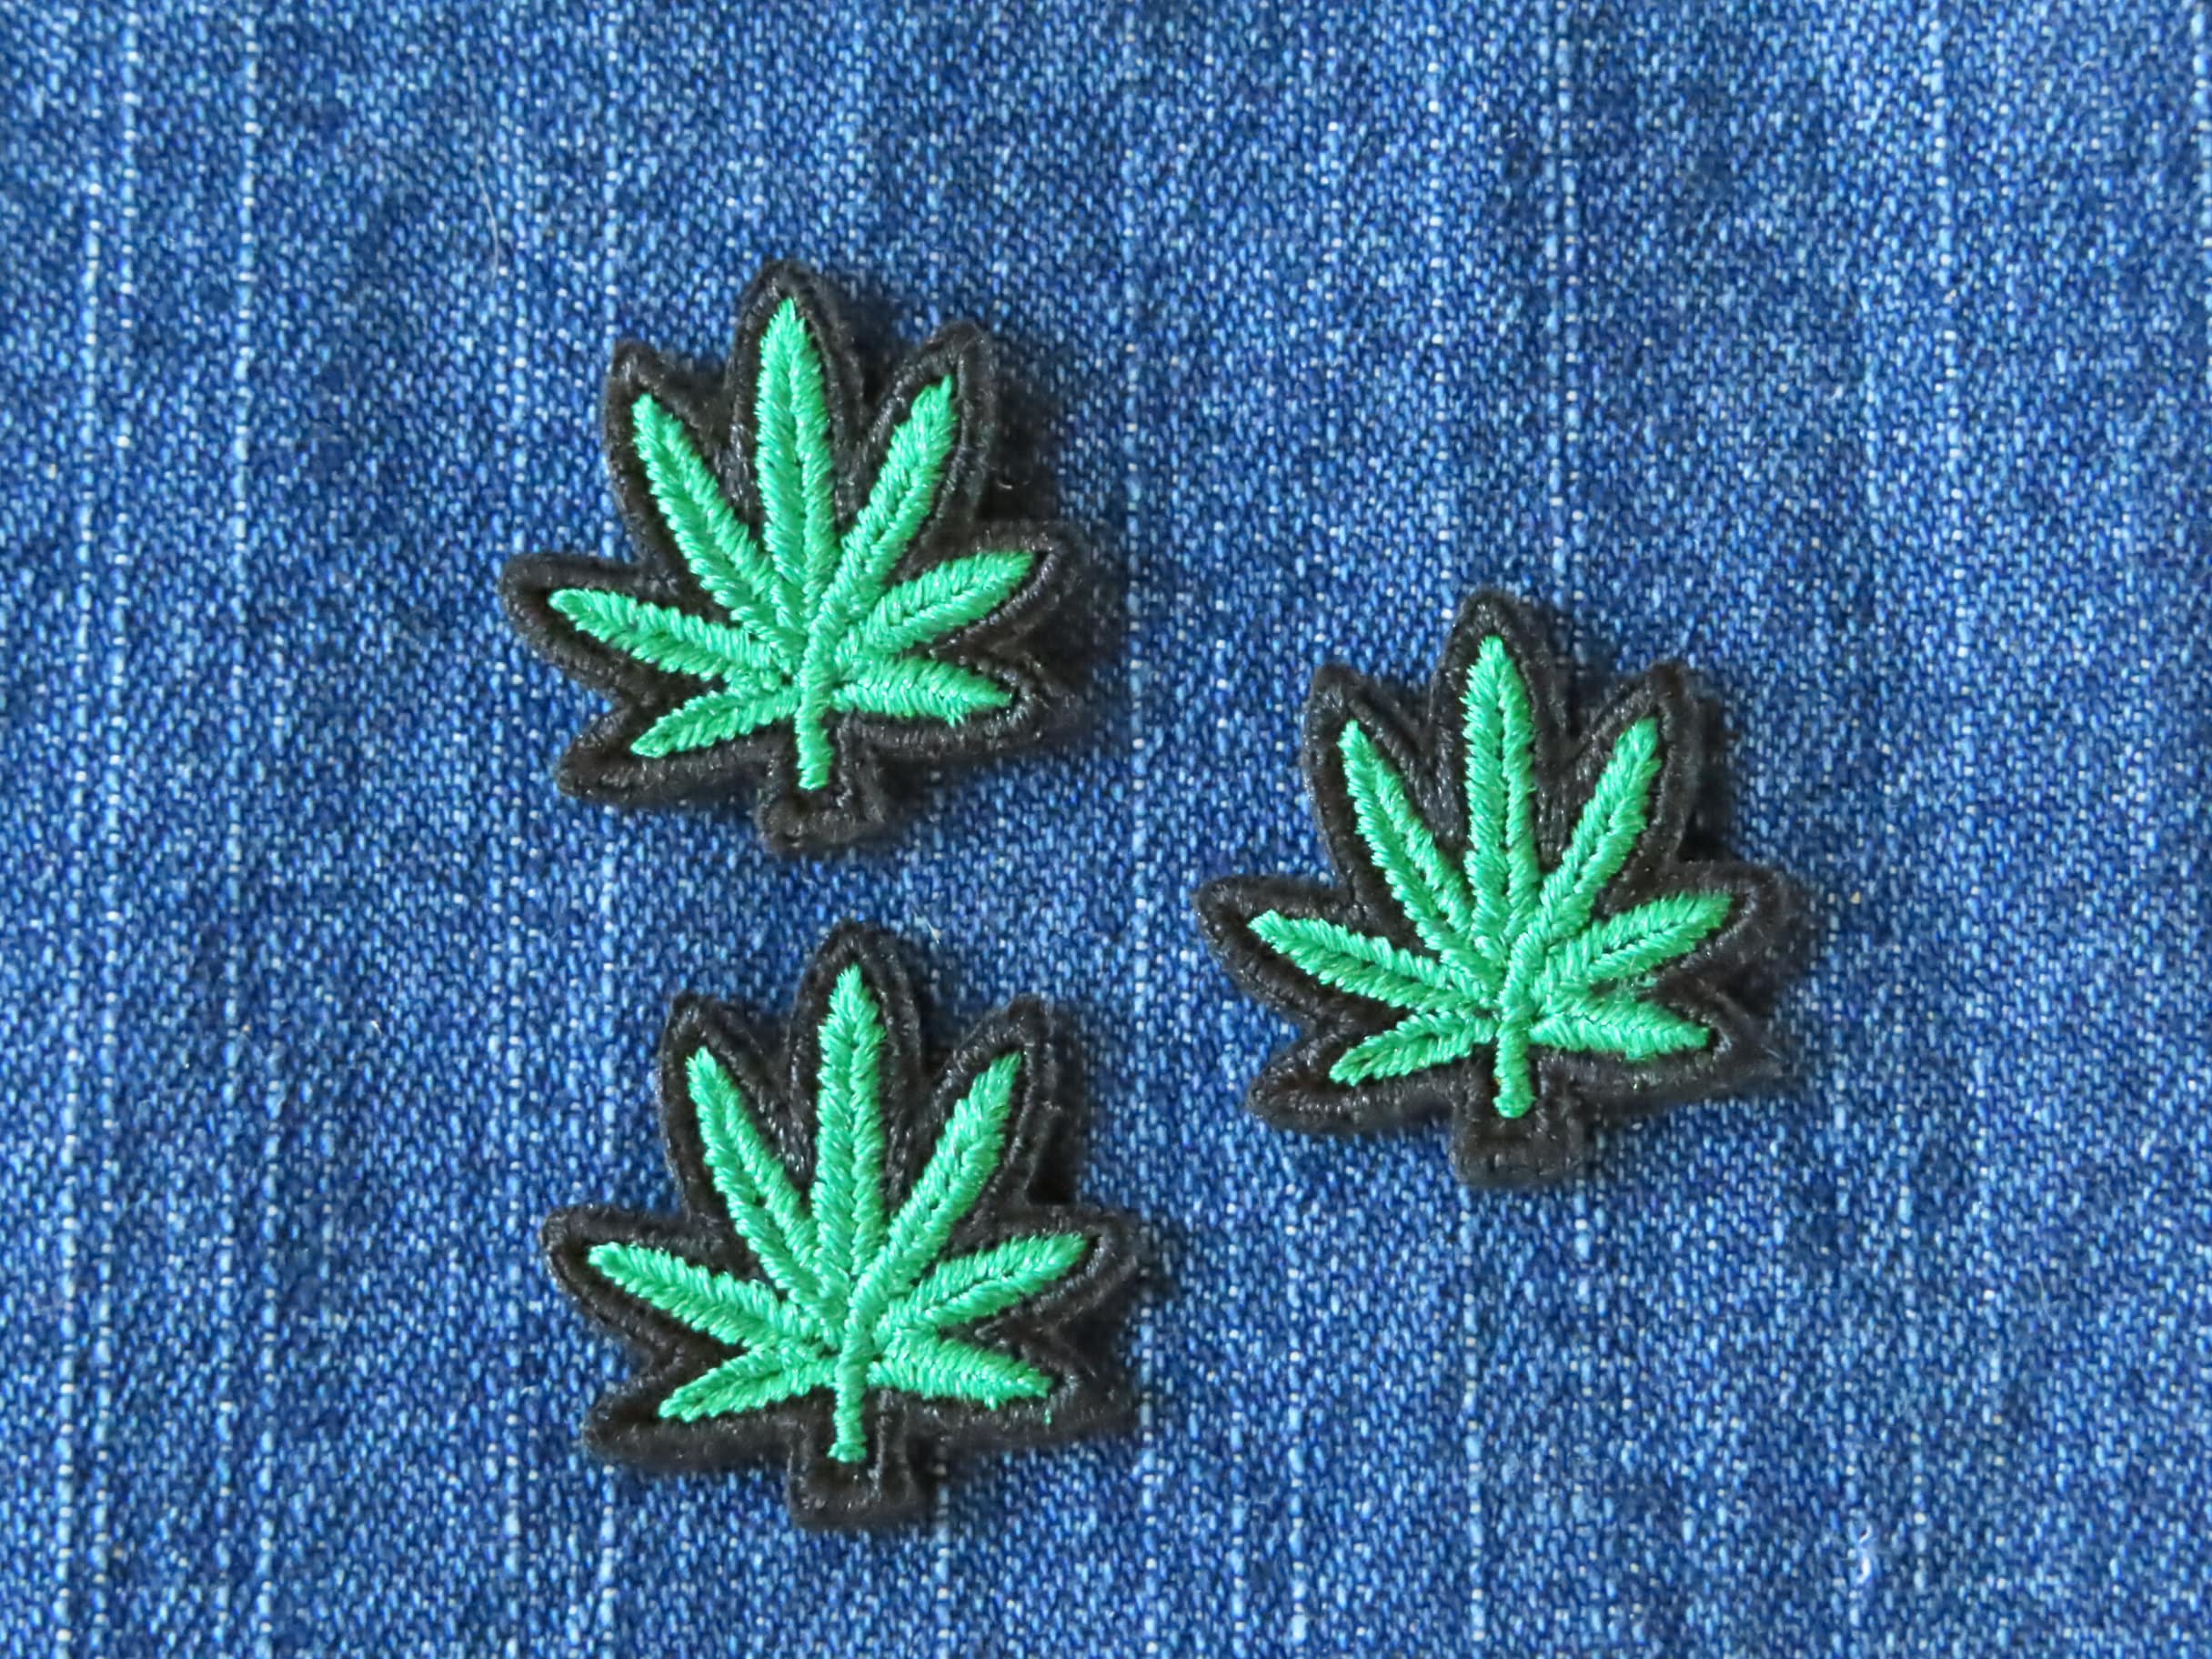  Weed Leaf Patch 4  Embroidered Marijuana Hemp Bud